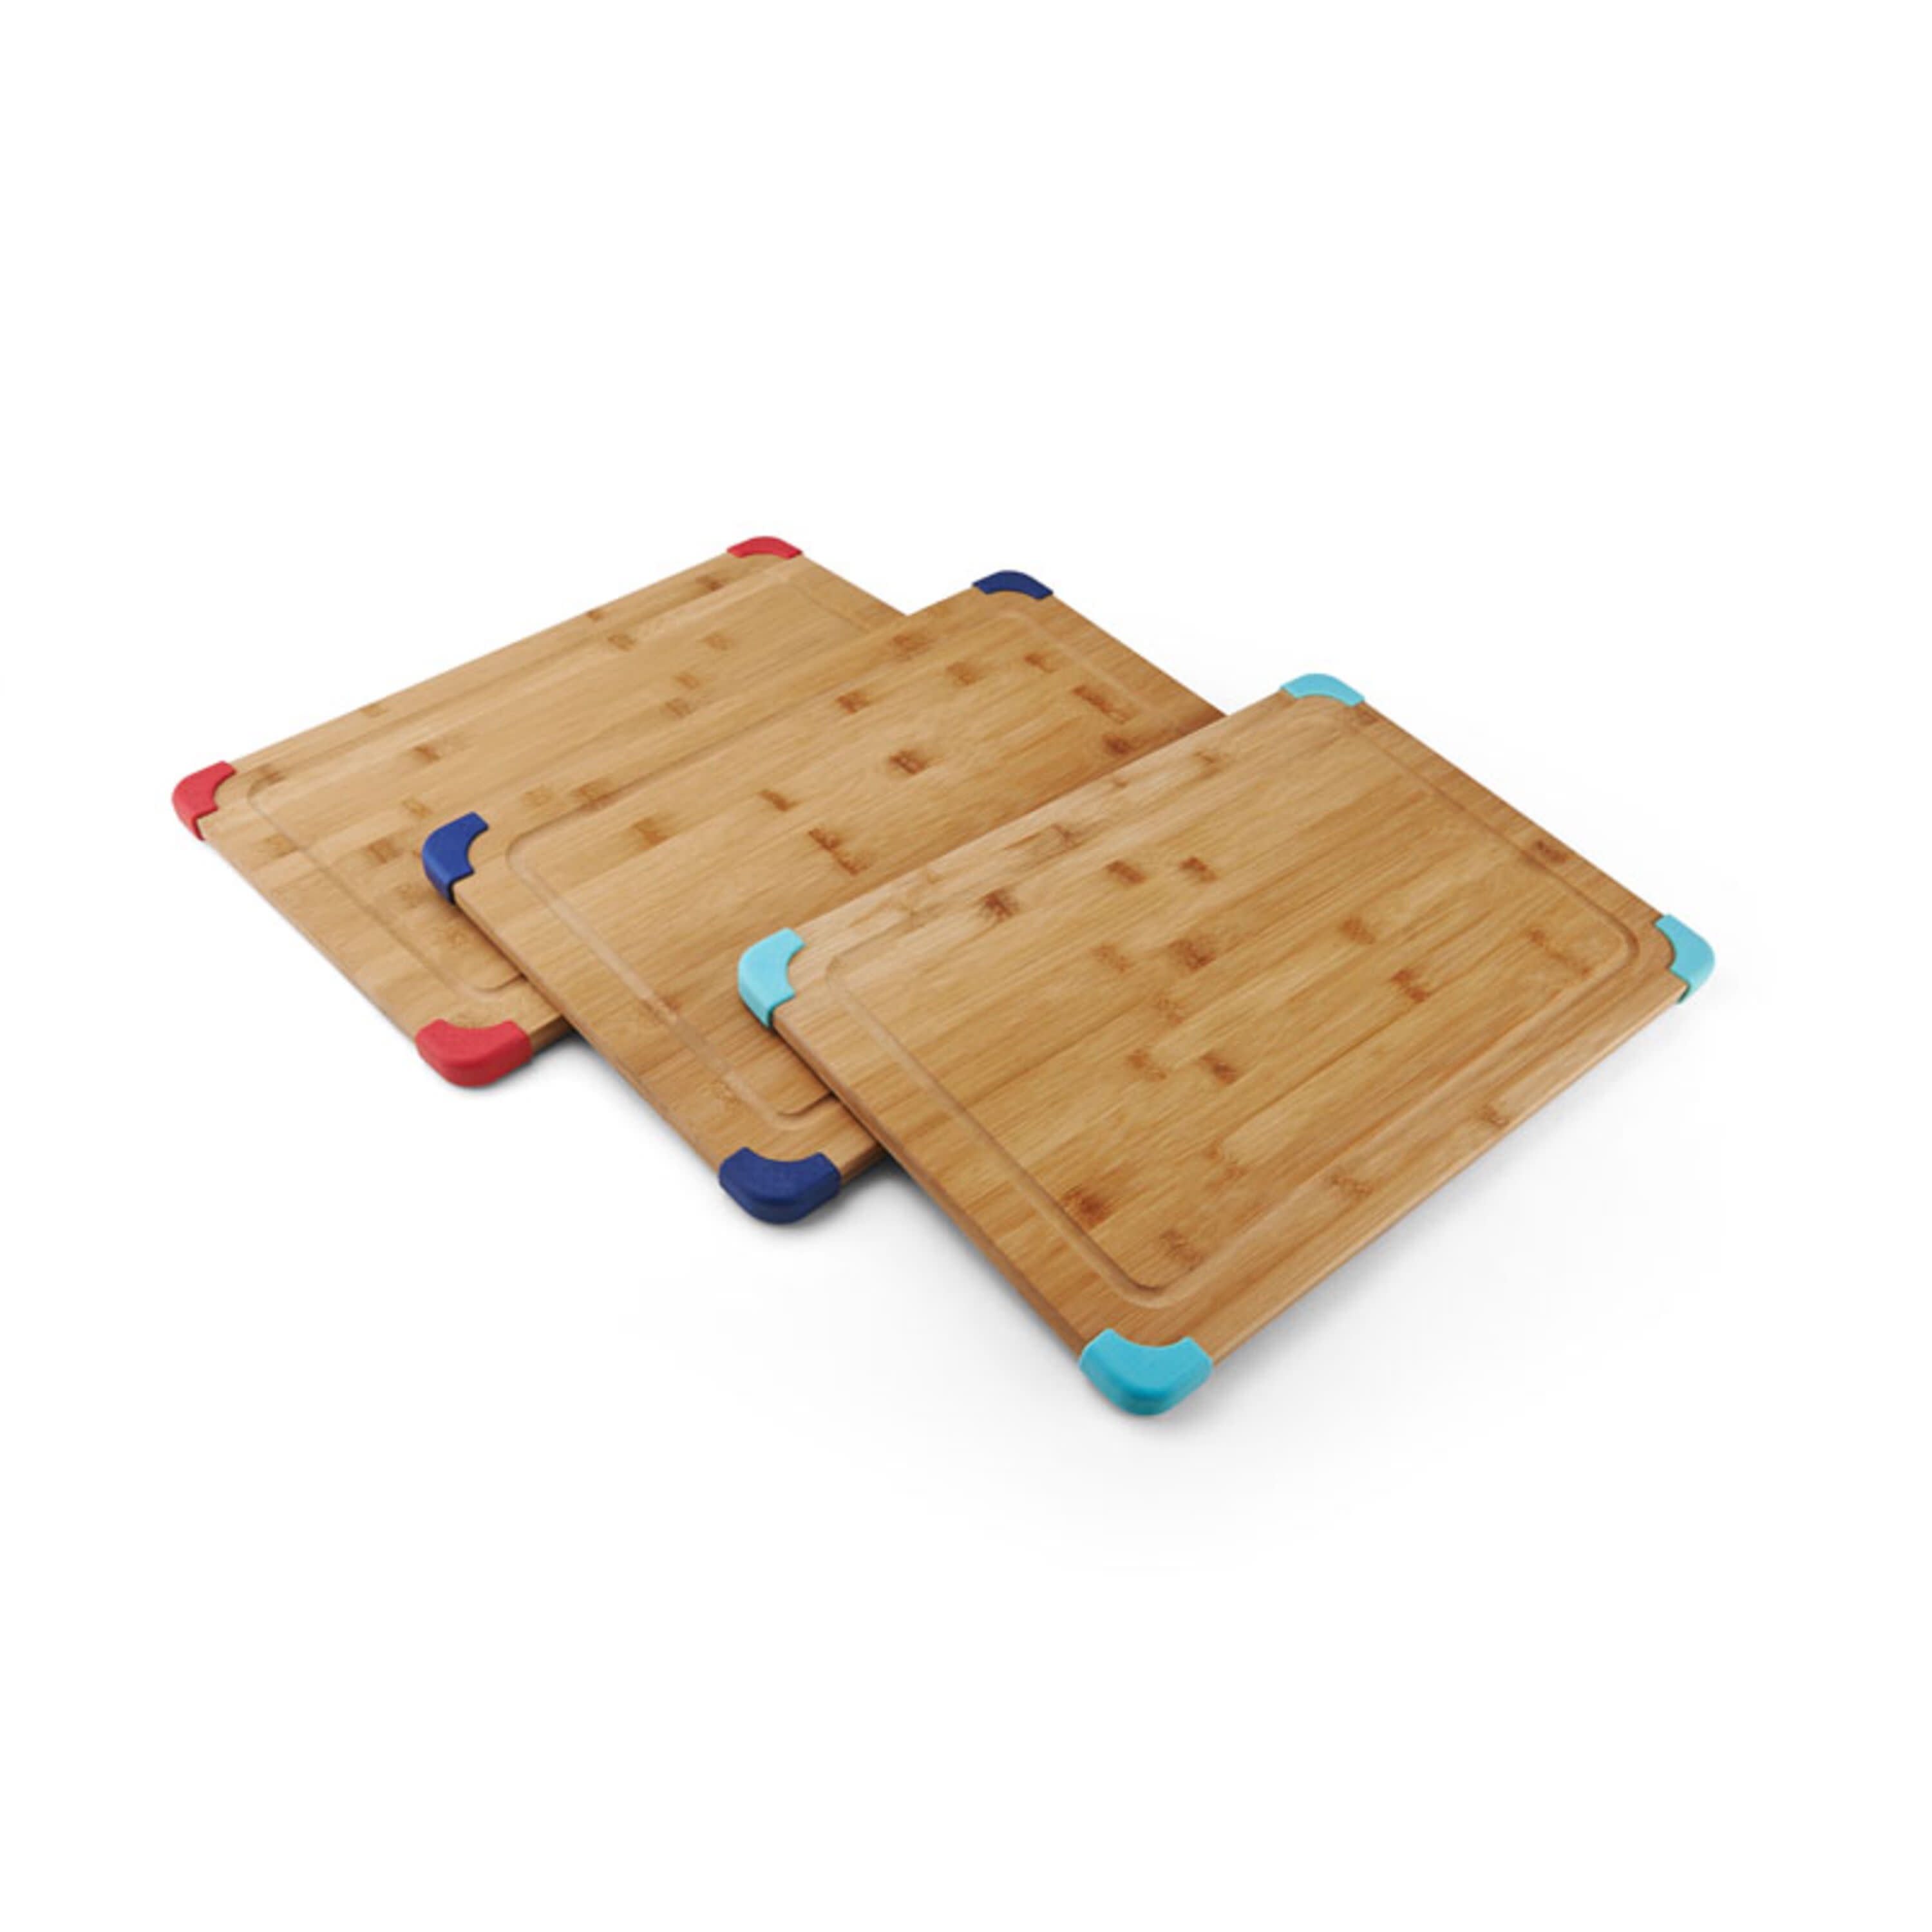 12″ x 18″ x 1/2″ Rectangular Beige Synthetic Rubber Cutting Board